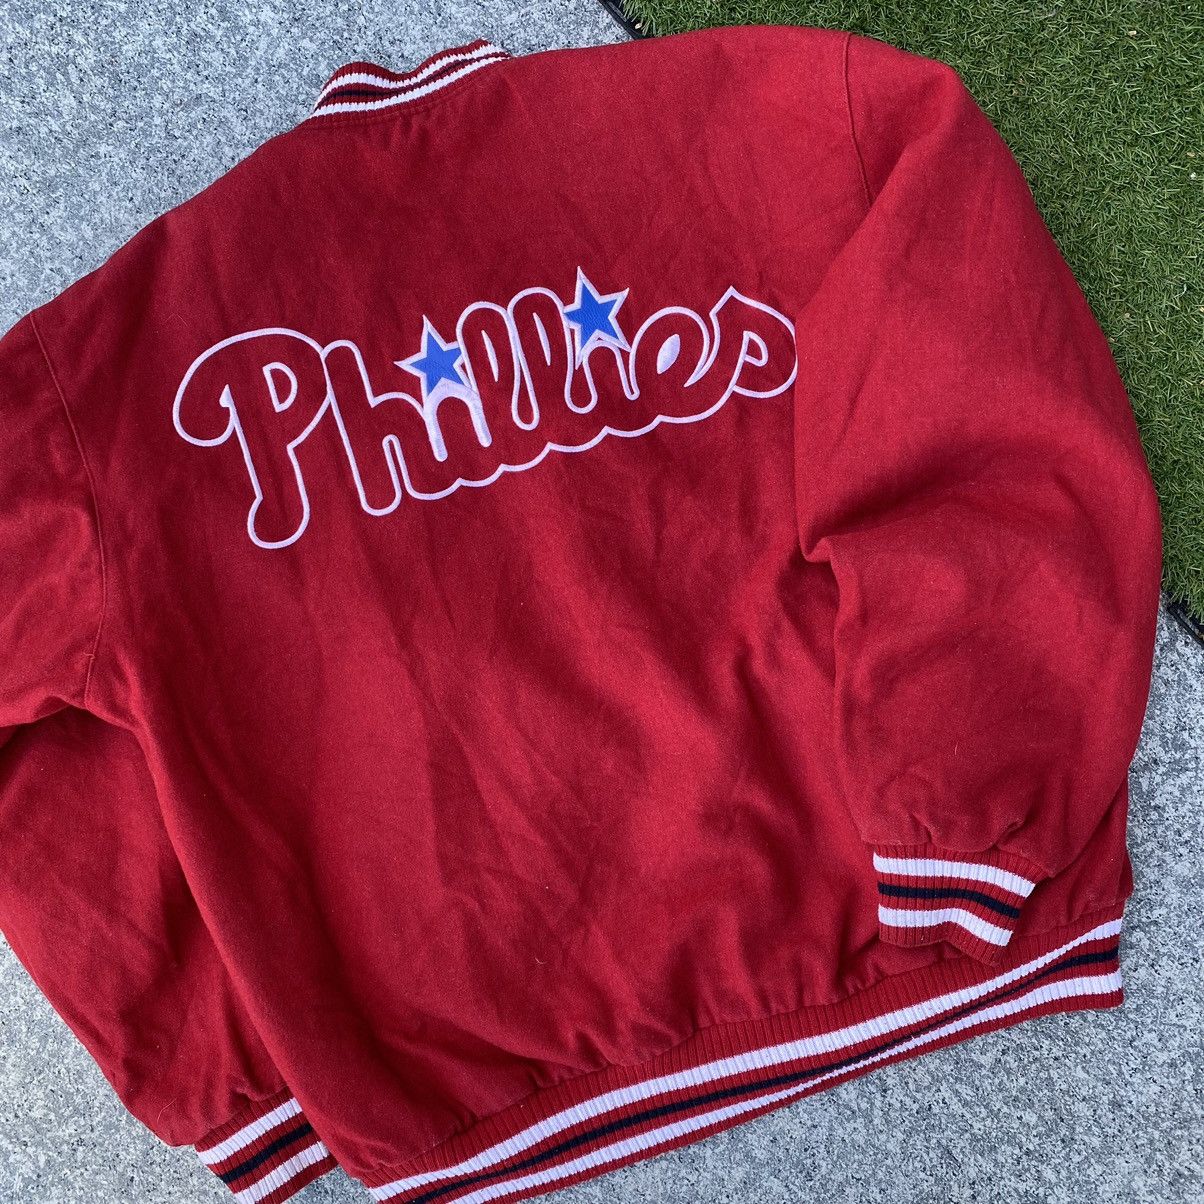 Philadelphia Phillies Reversible Bomber Jacket